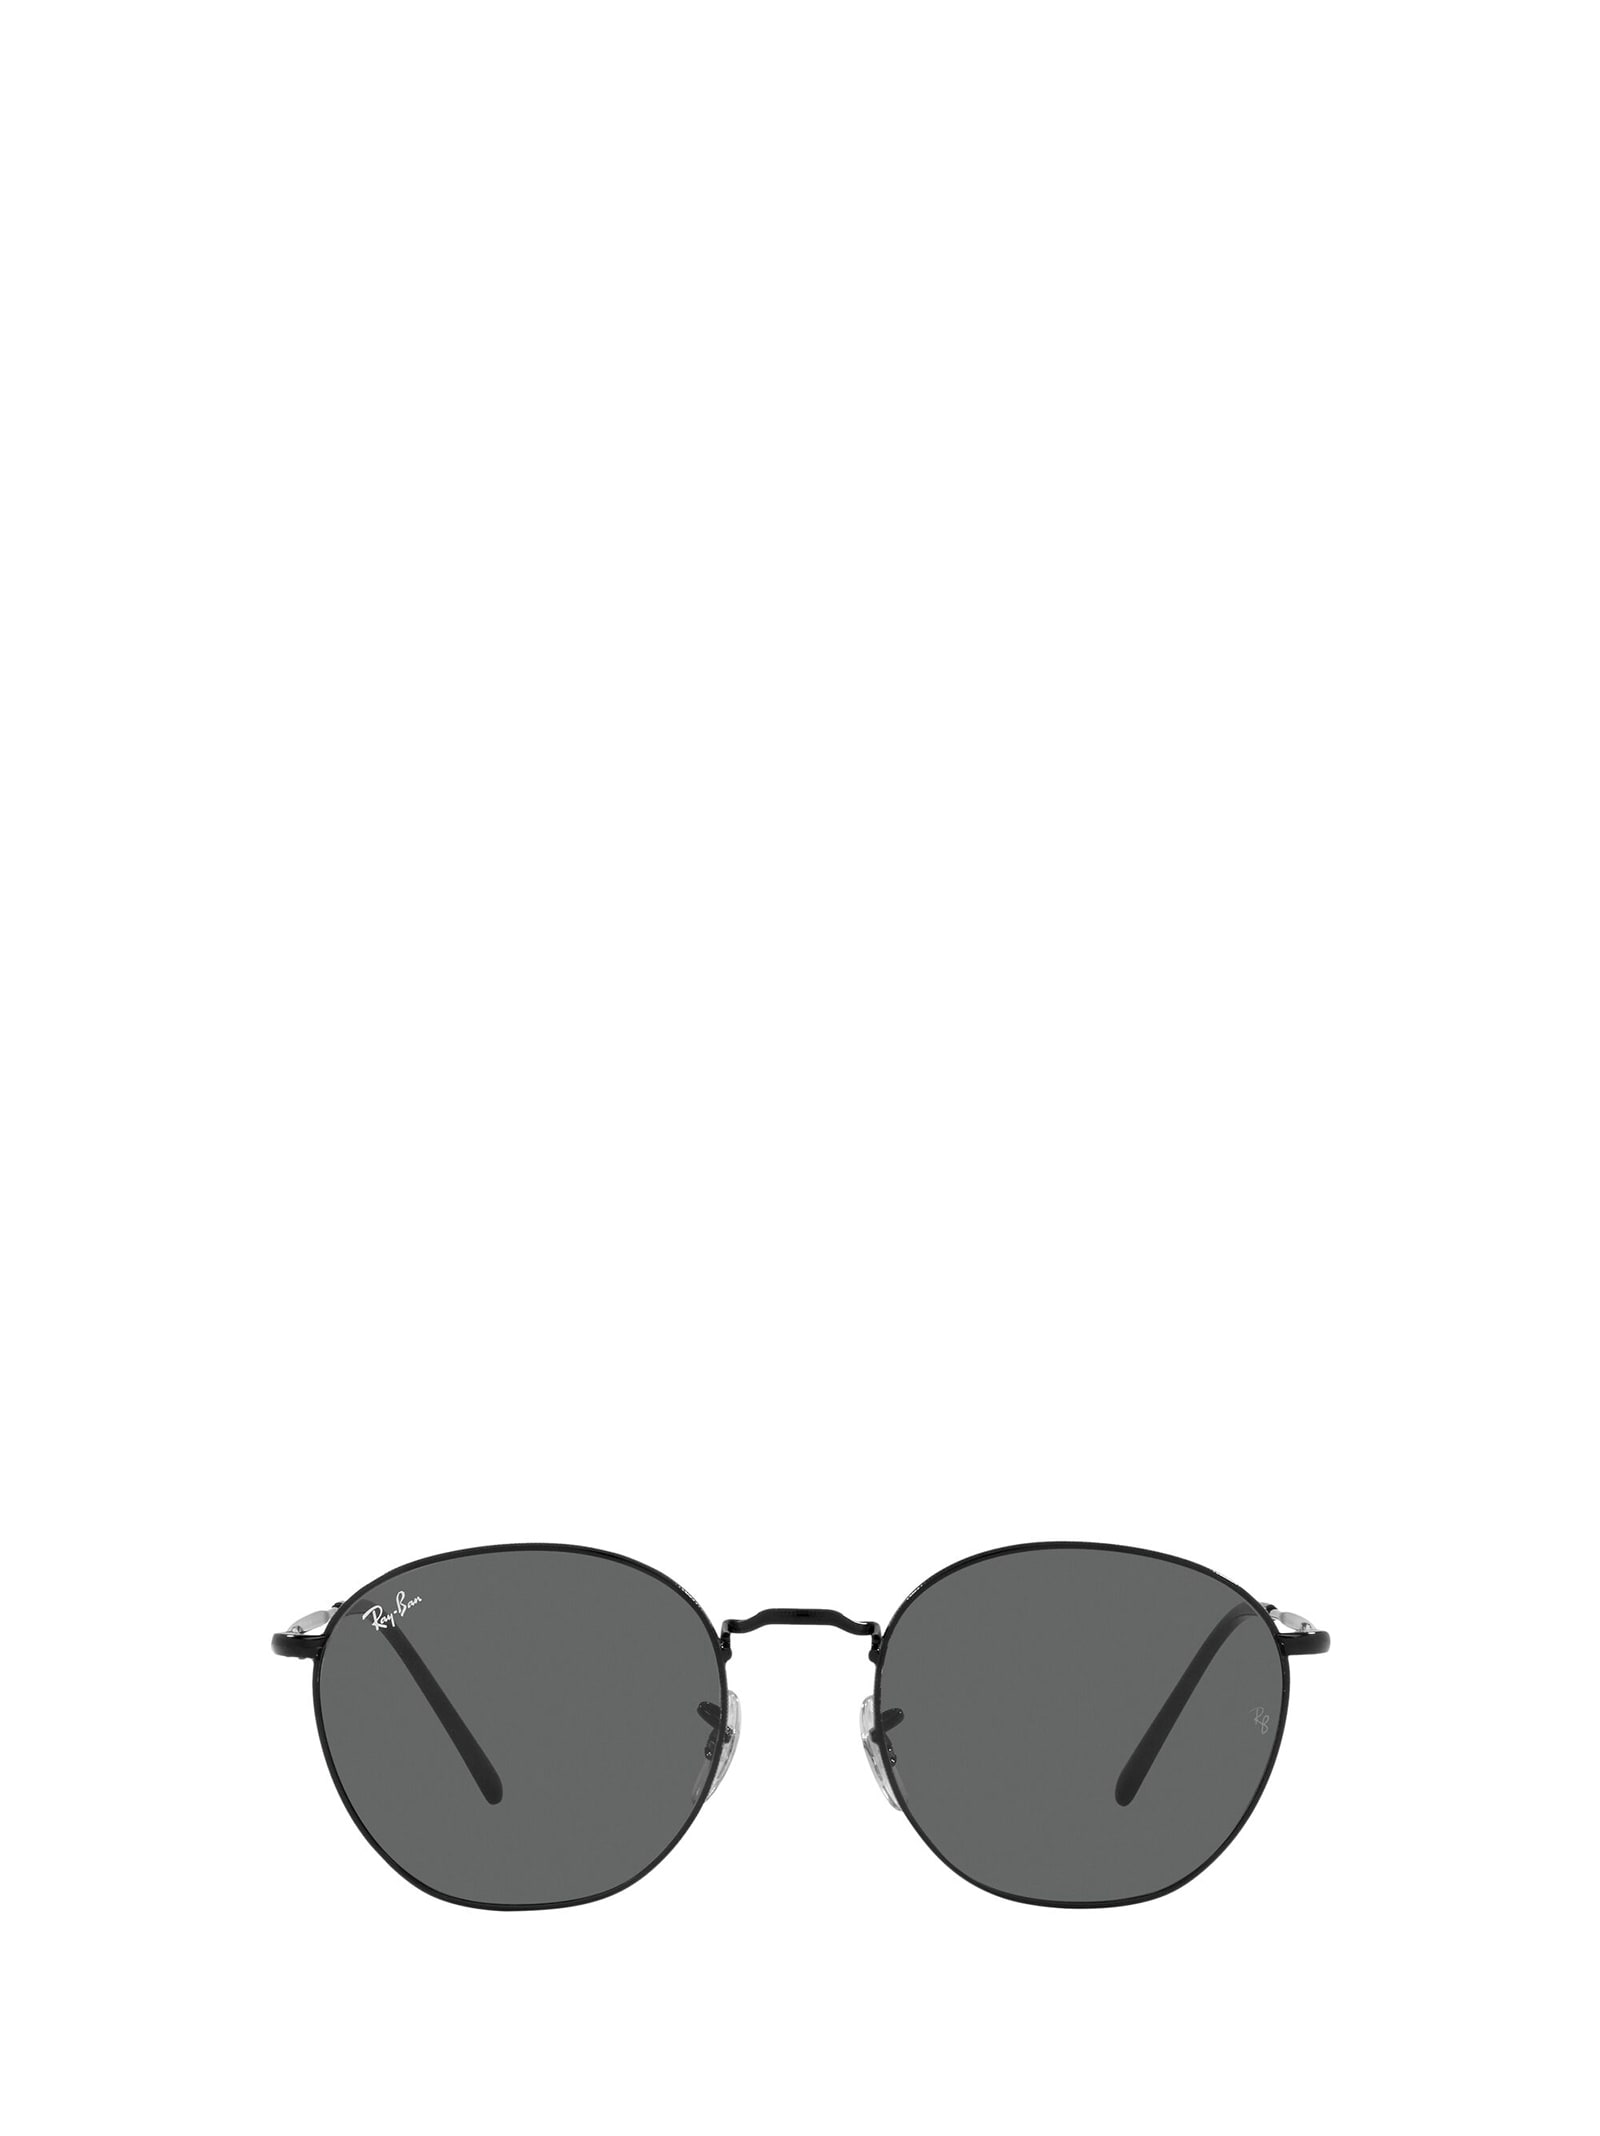 Ray-Ban Rb3772 Black Sunglasses